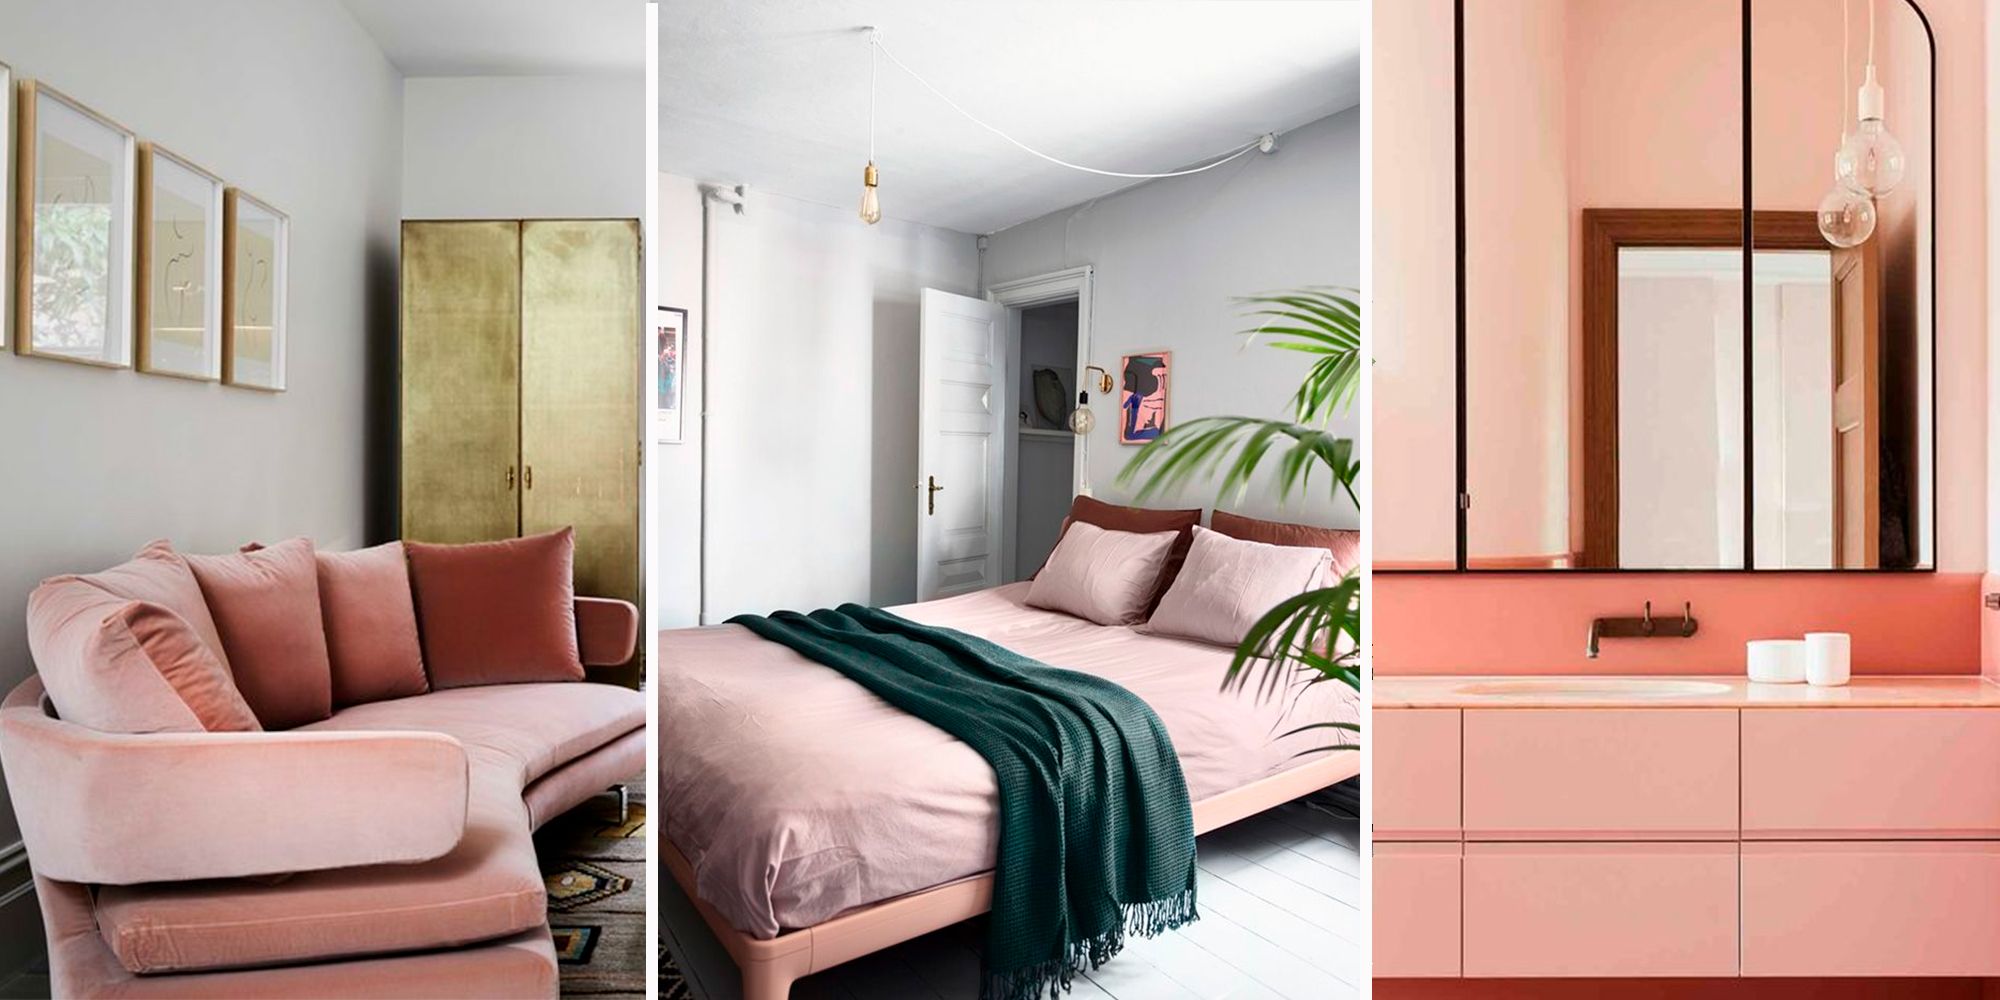 Inútil escalera mecánica mini Color rosa palo: 25 ideas para decorar con el color de moda